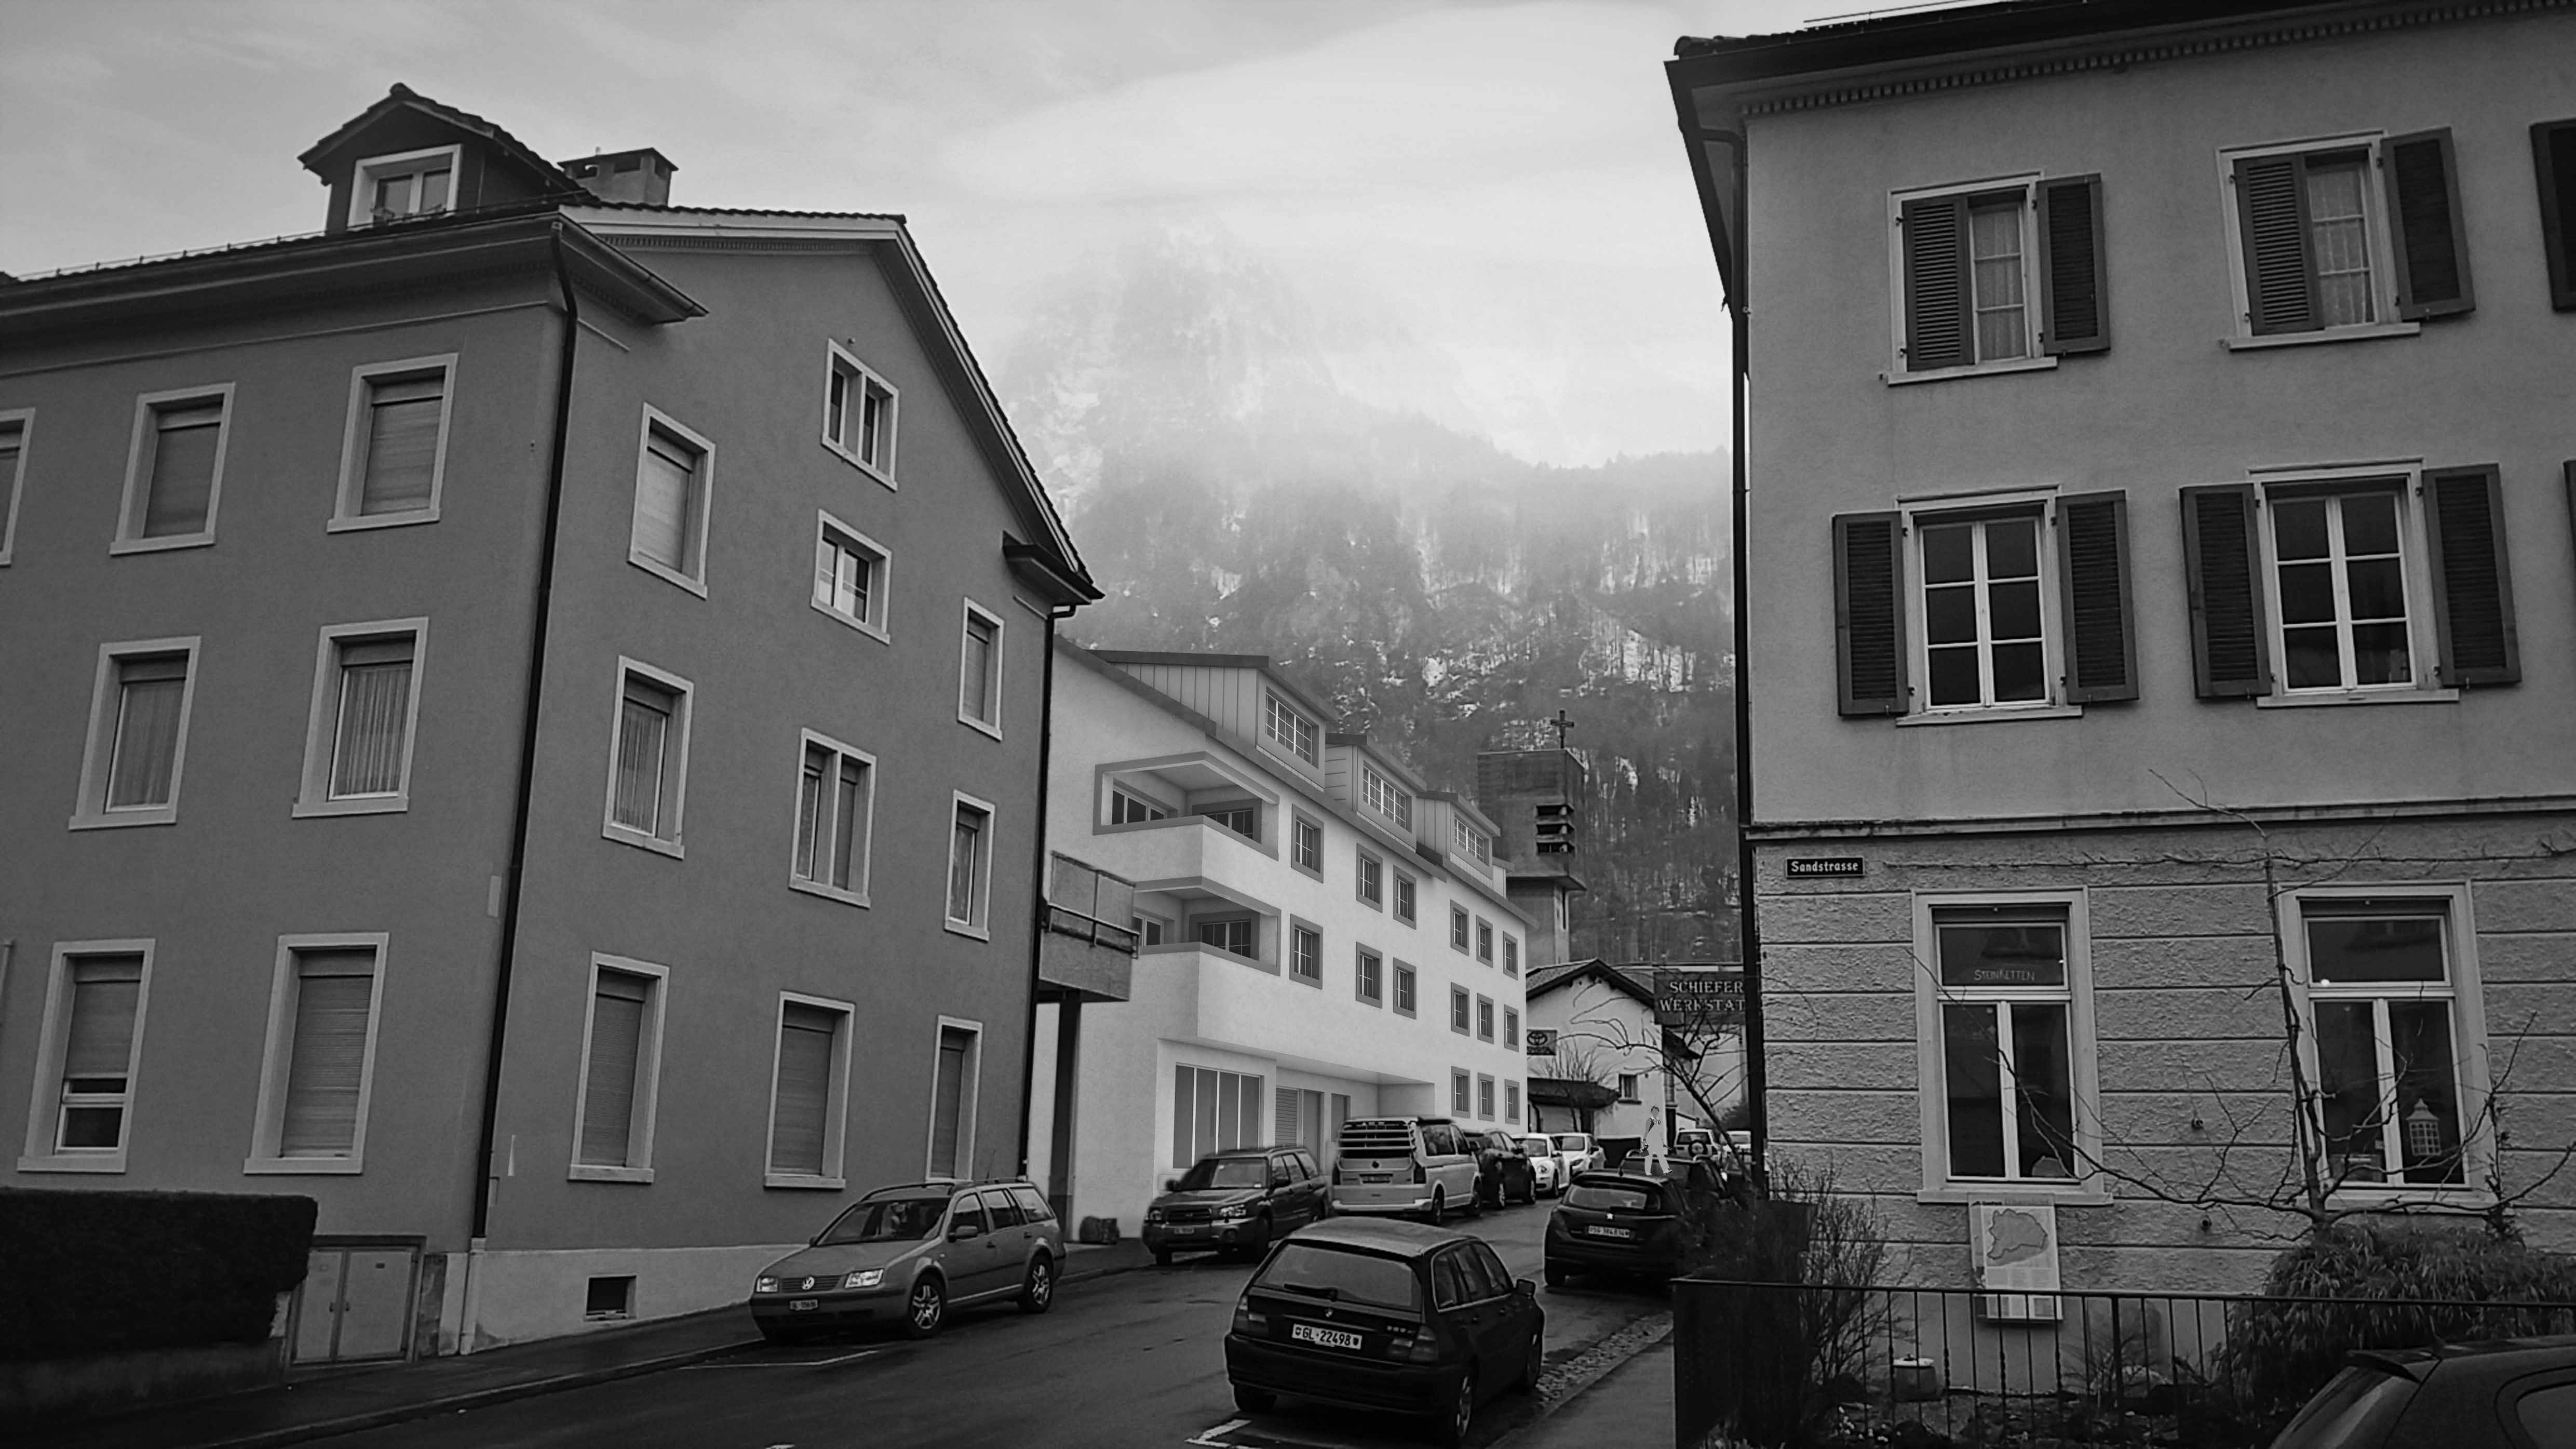 MFH in Bolengasse 1, Glarus